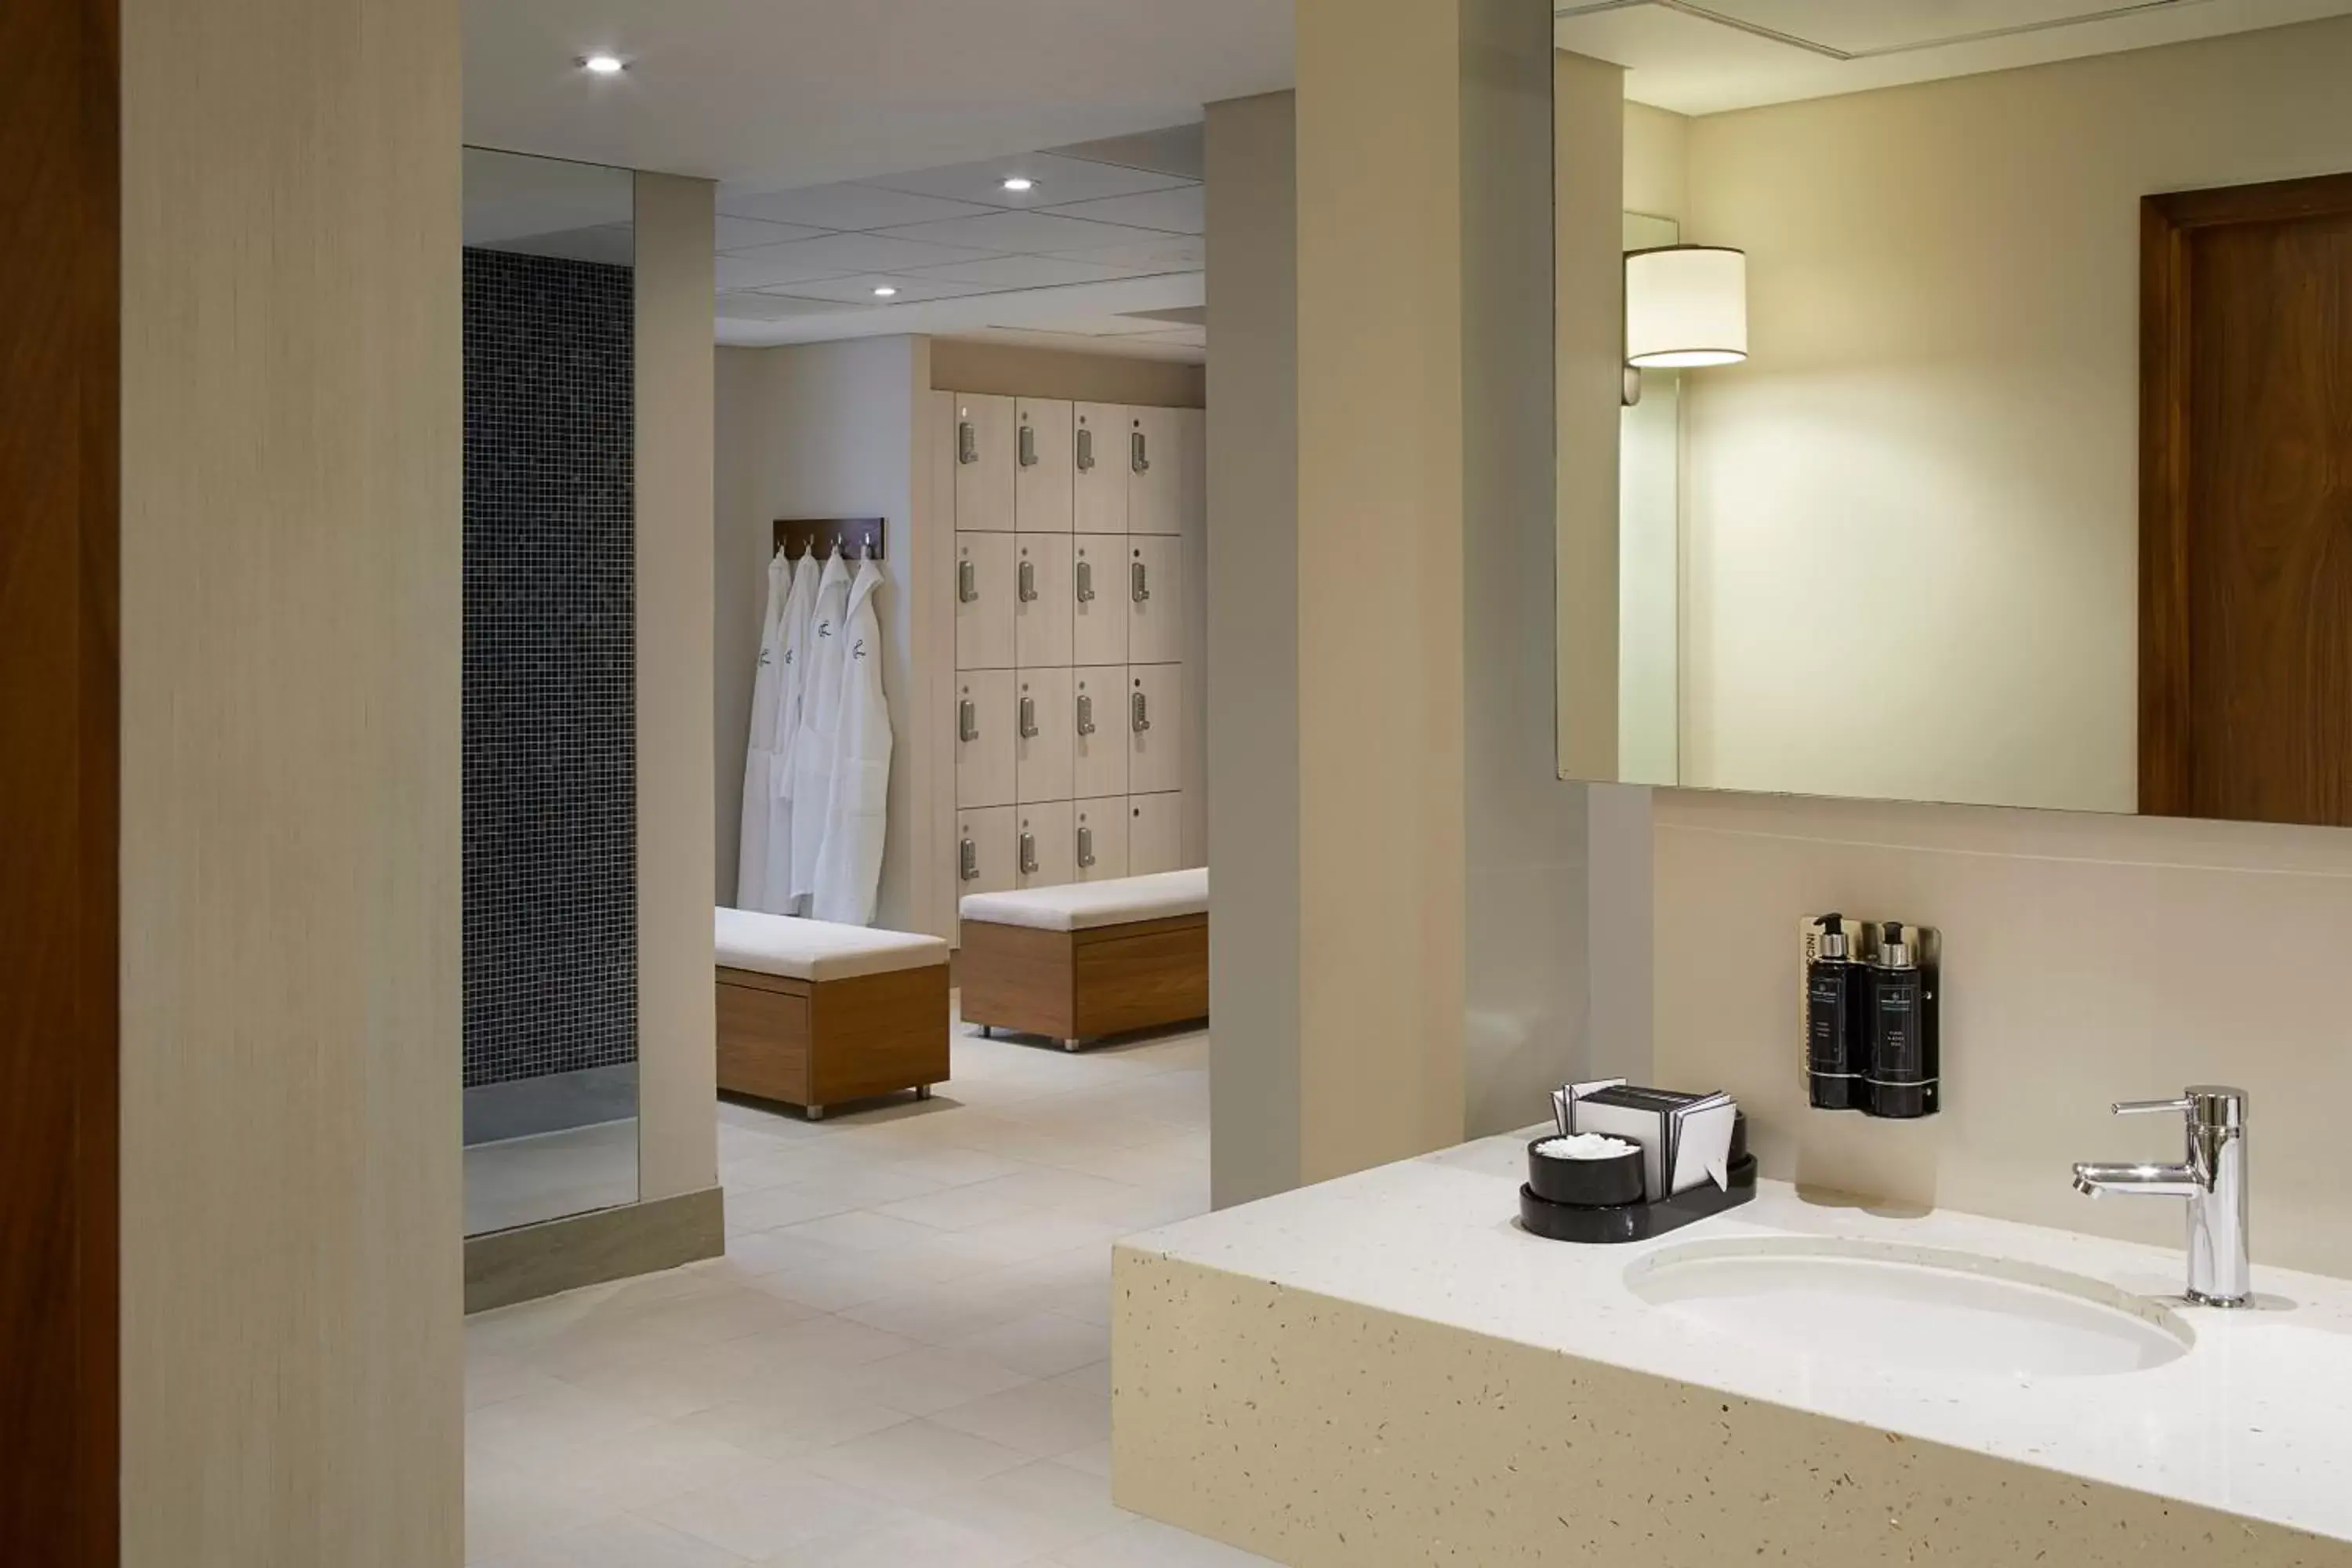 Area and facilities, Bathroom in The Landmark London